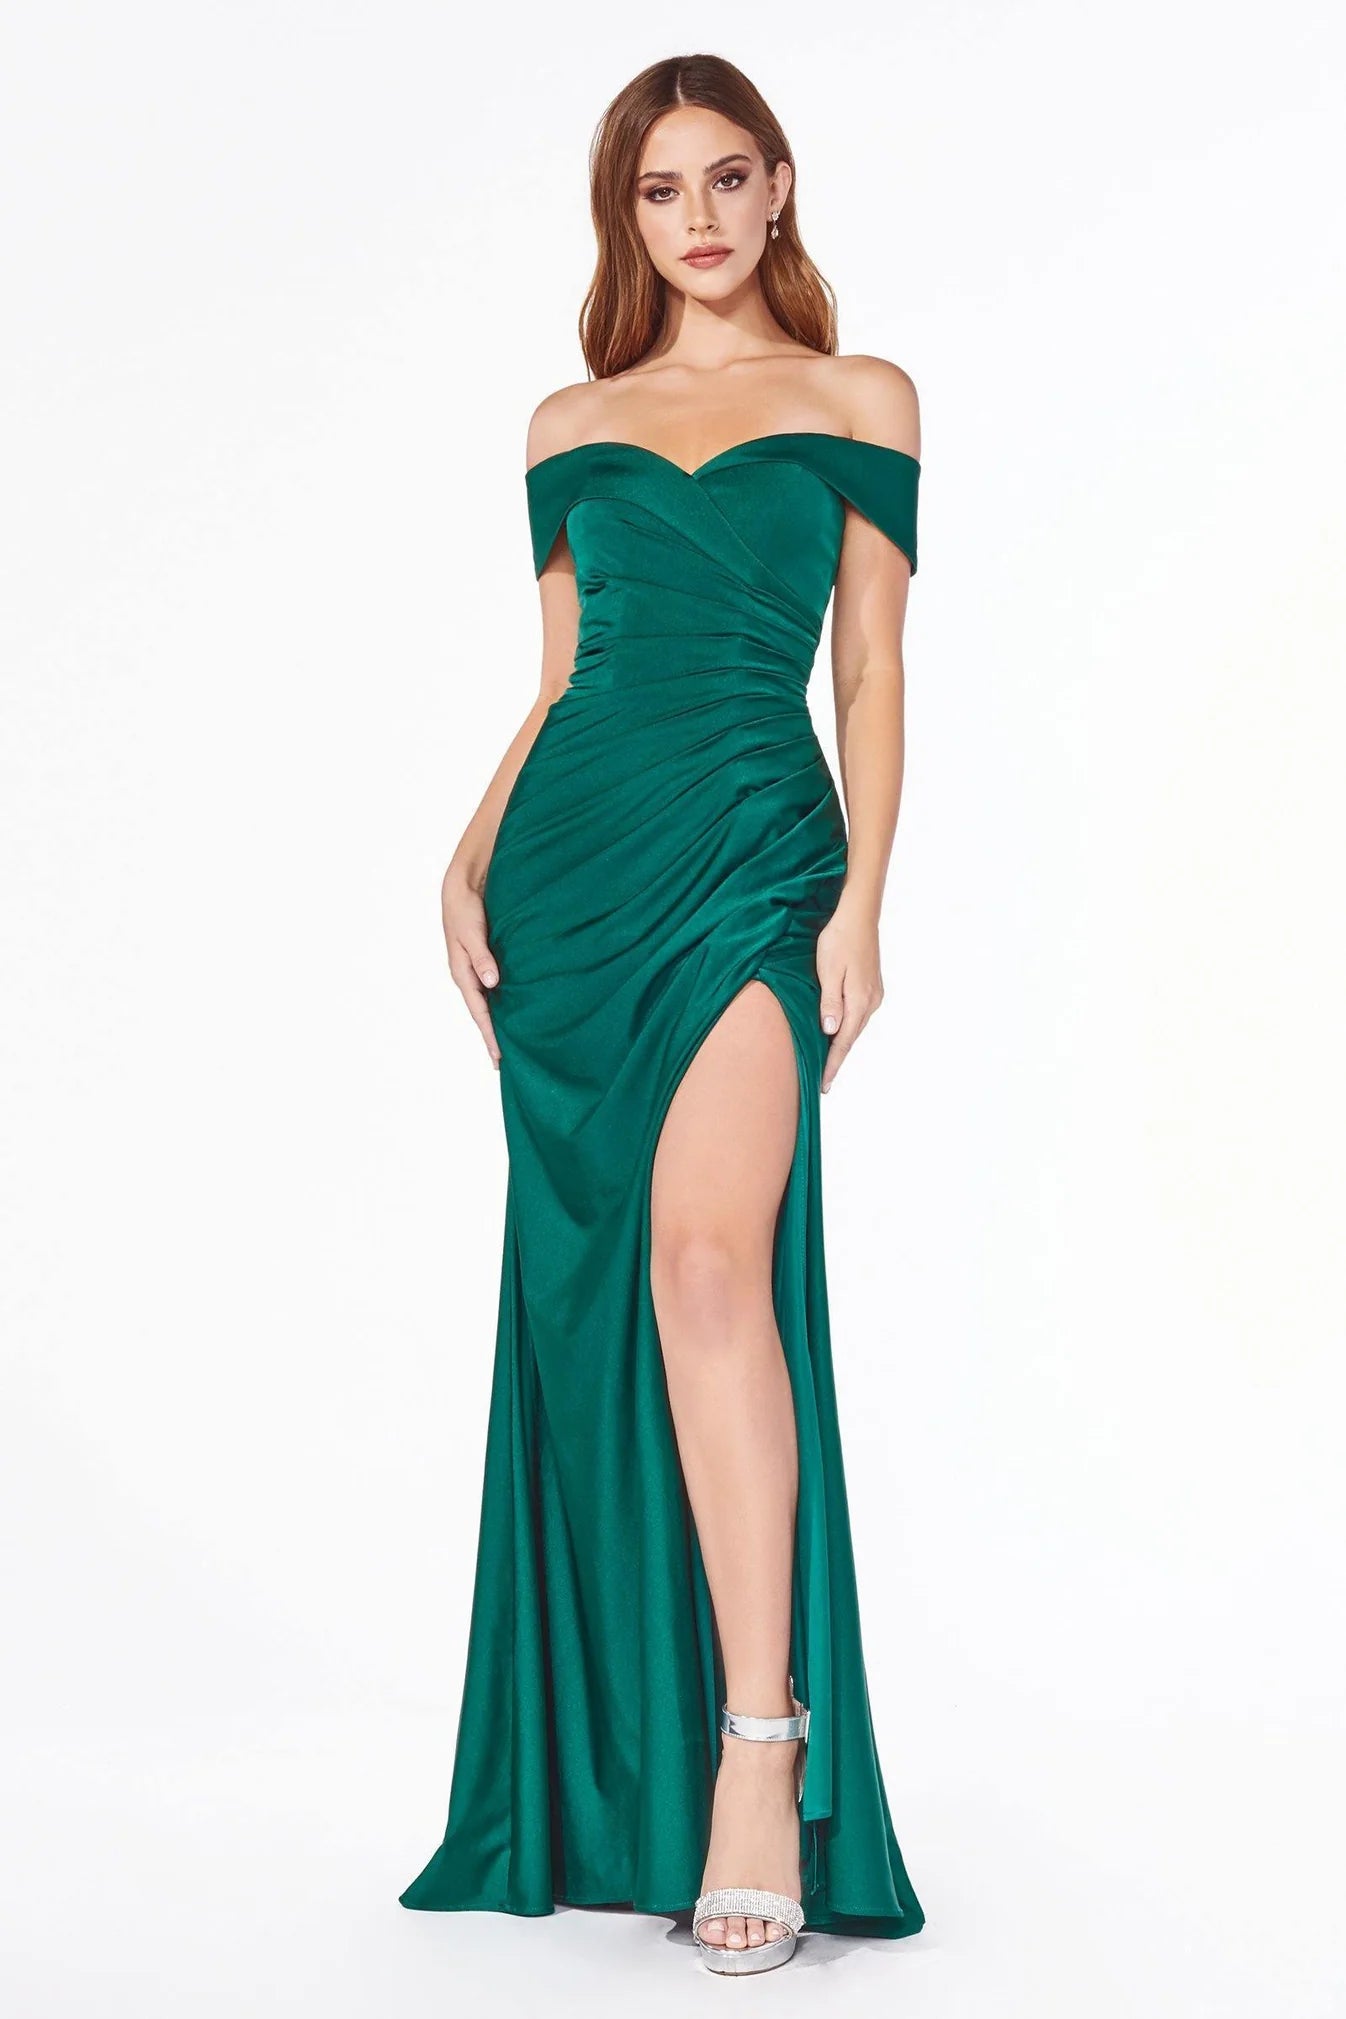 Ladivine Emerald Off-The-Shoulder Evening Gown